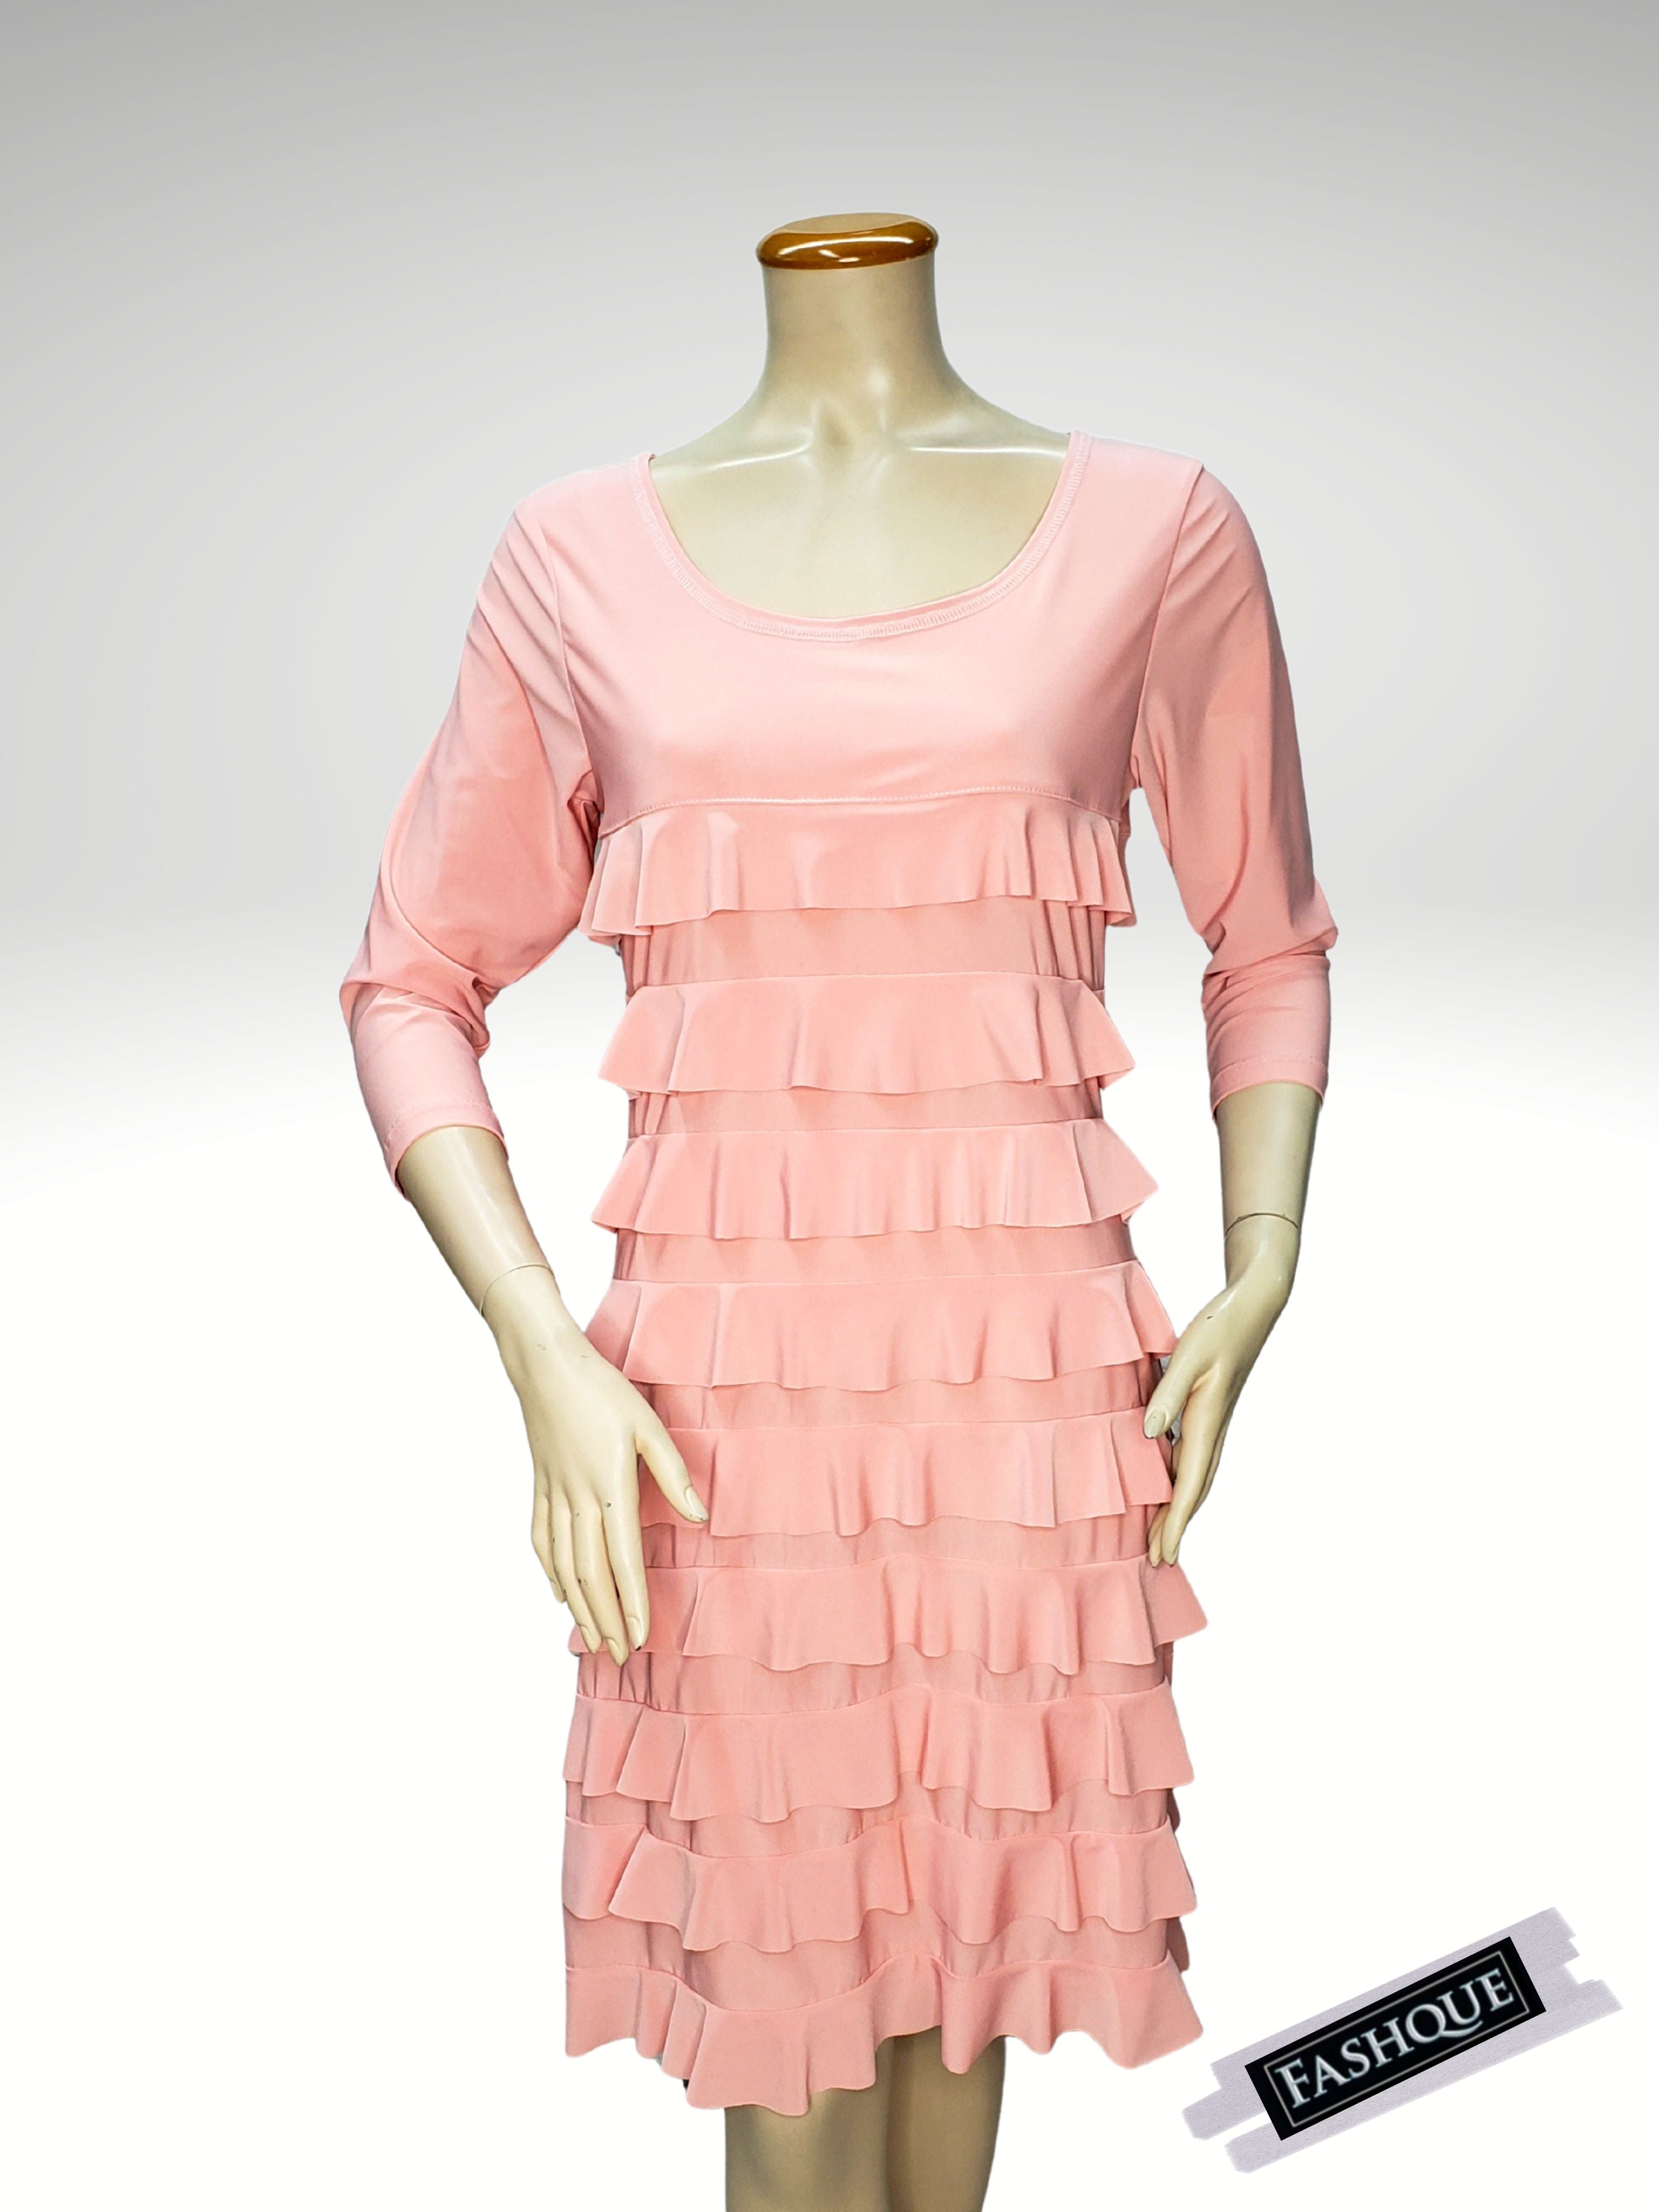 FASHQUE - Ruffle Dress 3/4 Sleeve  - D049 SALE